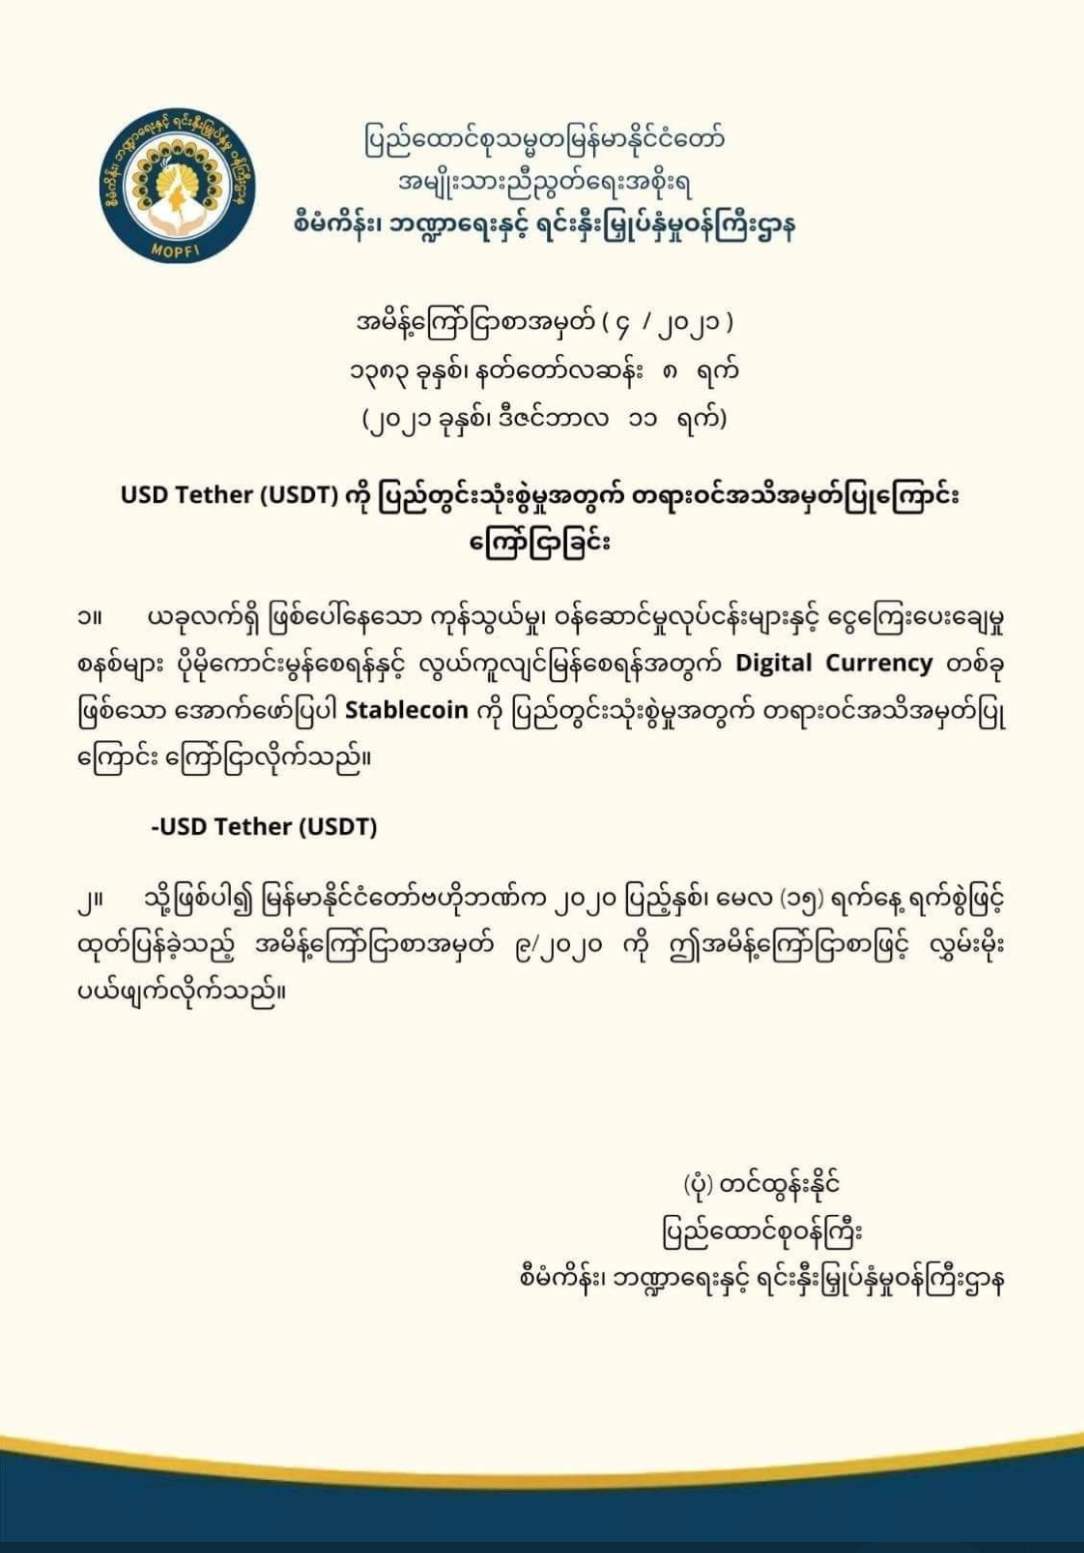 Myanmar legalizes Tether (USDT) as a legal tender